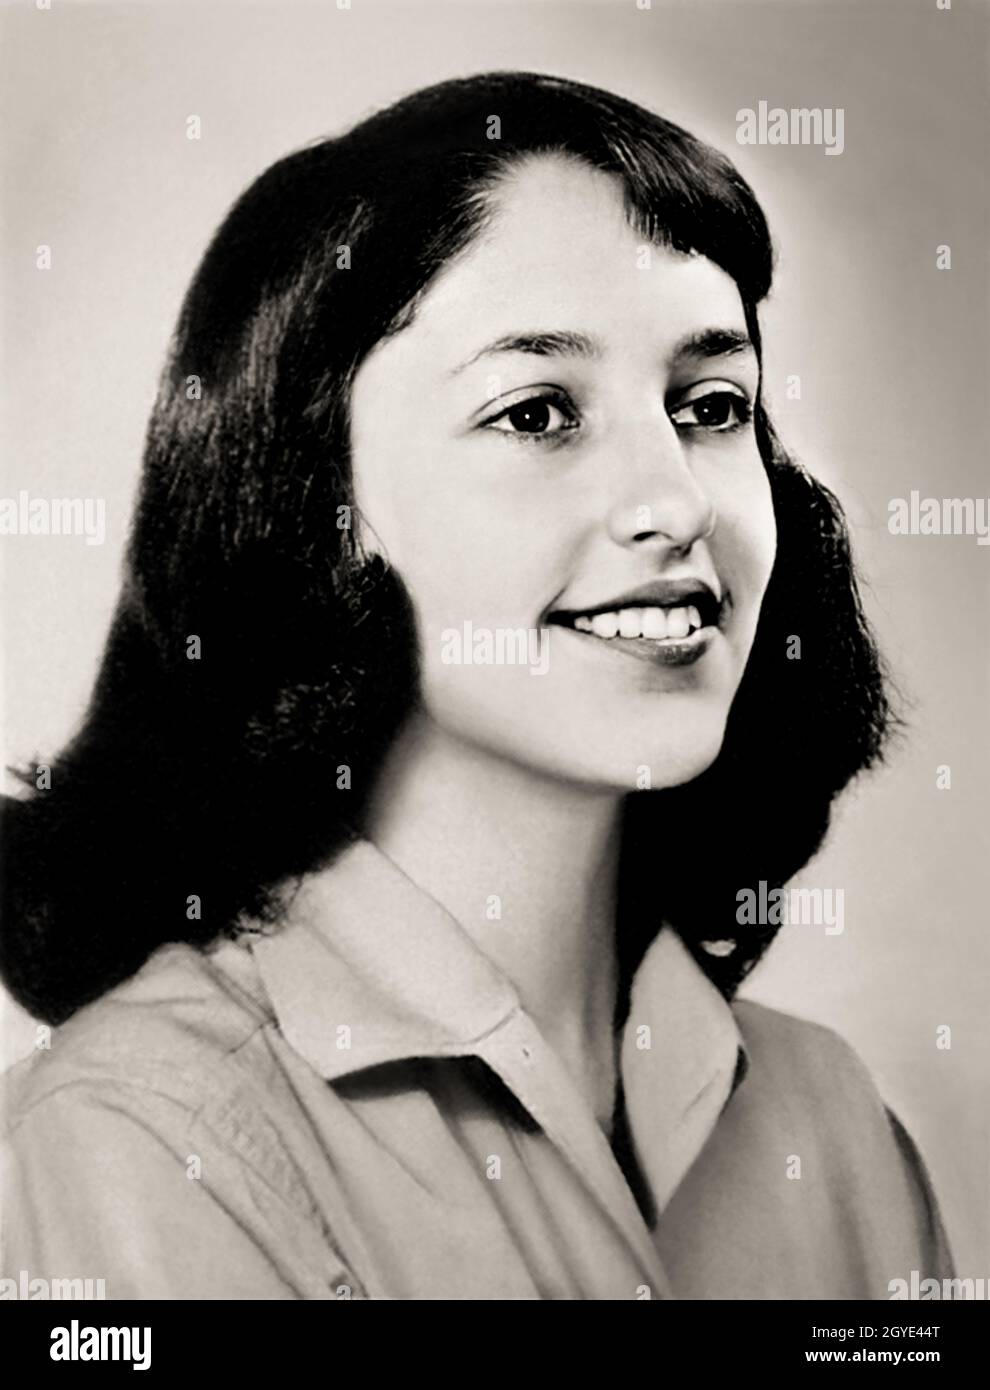 1956 , USA : The celebrated american Folk singer JOAN BAEZ ( born 9 january 1941 ) when was a young girl aged 15 , photo pubblished in High School Yearbook annuary . Unknown photographer. - HISTORY - FOTO STORICHE - personalità da giovane giovani - ragazza - personality personalities when was young girl - INFANZIA - CHILDHOOD - POP MUSIC - MUSICA - cantante - TEENAGER - RAGAZZA - CHILDHOOD - INFANZIA - smile - sorriso --- ARCHIVIO GBB Stock Photo